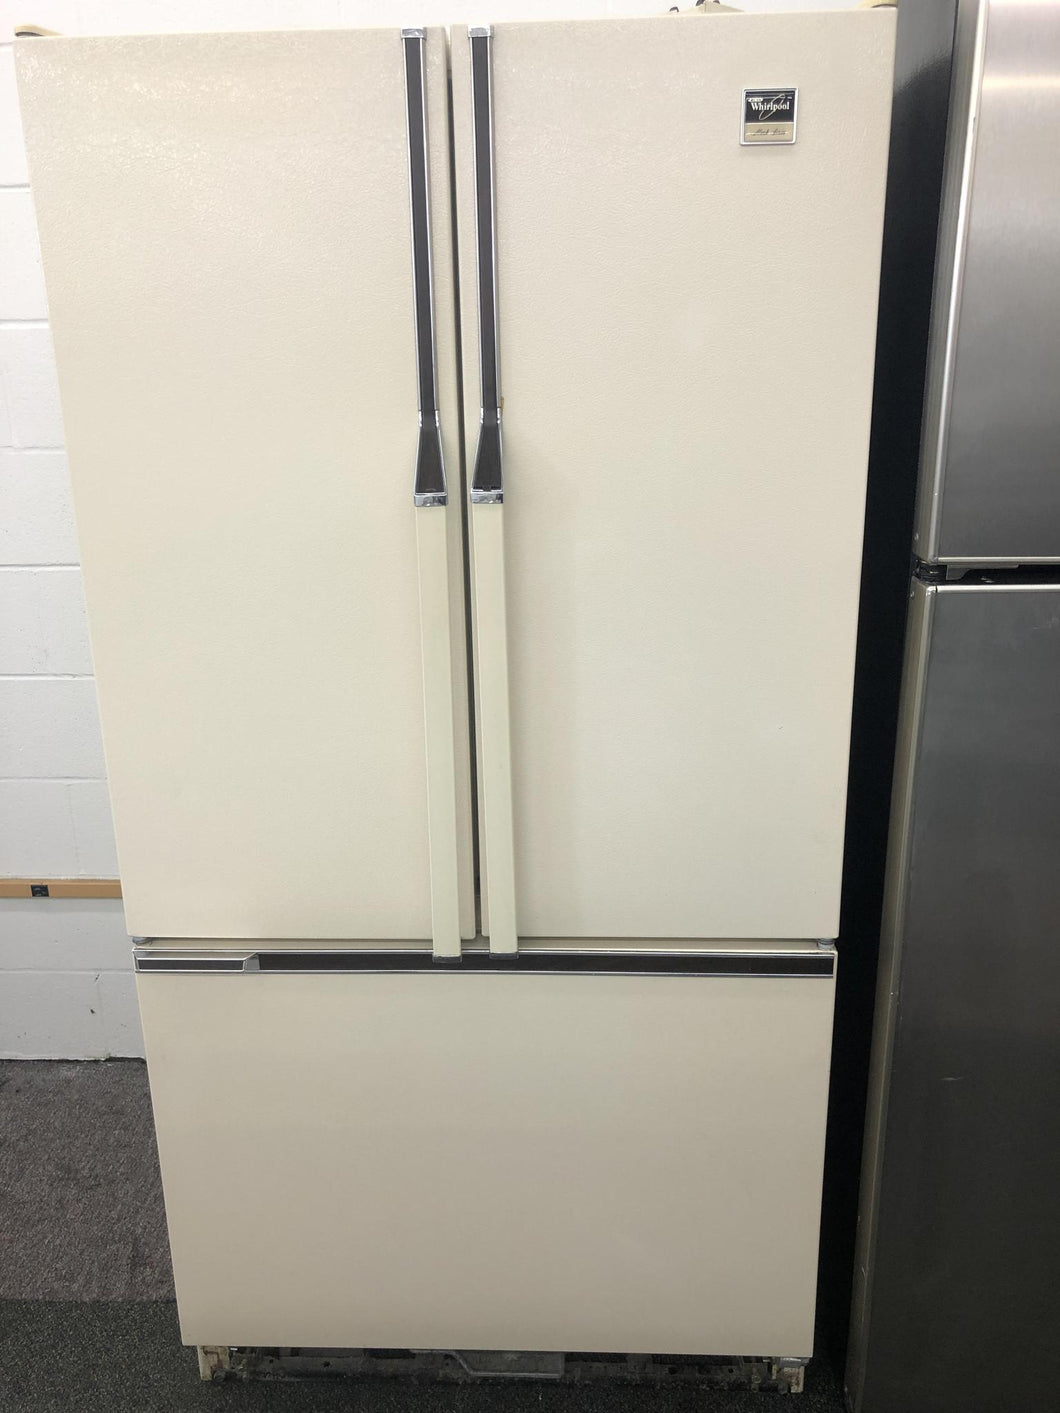 Whirlpool French Door Refrigerator - 0197